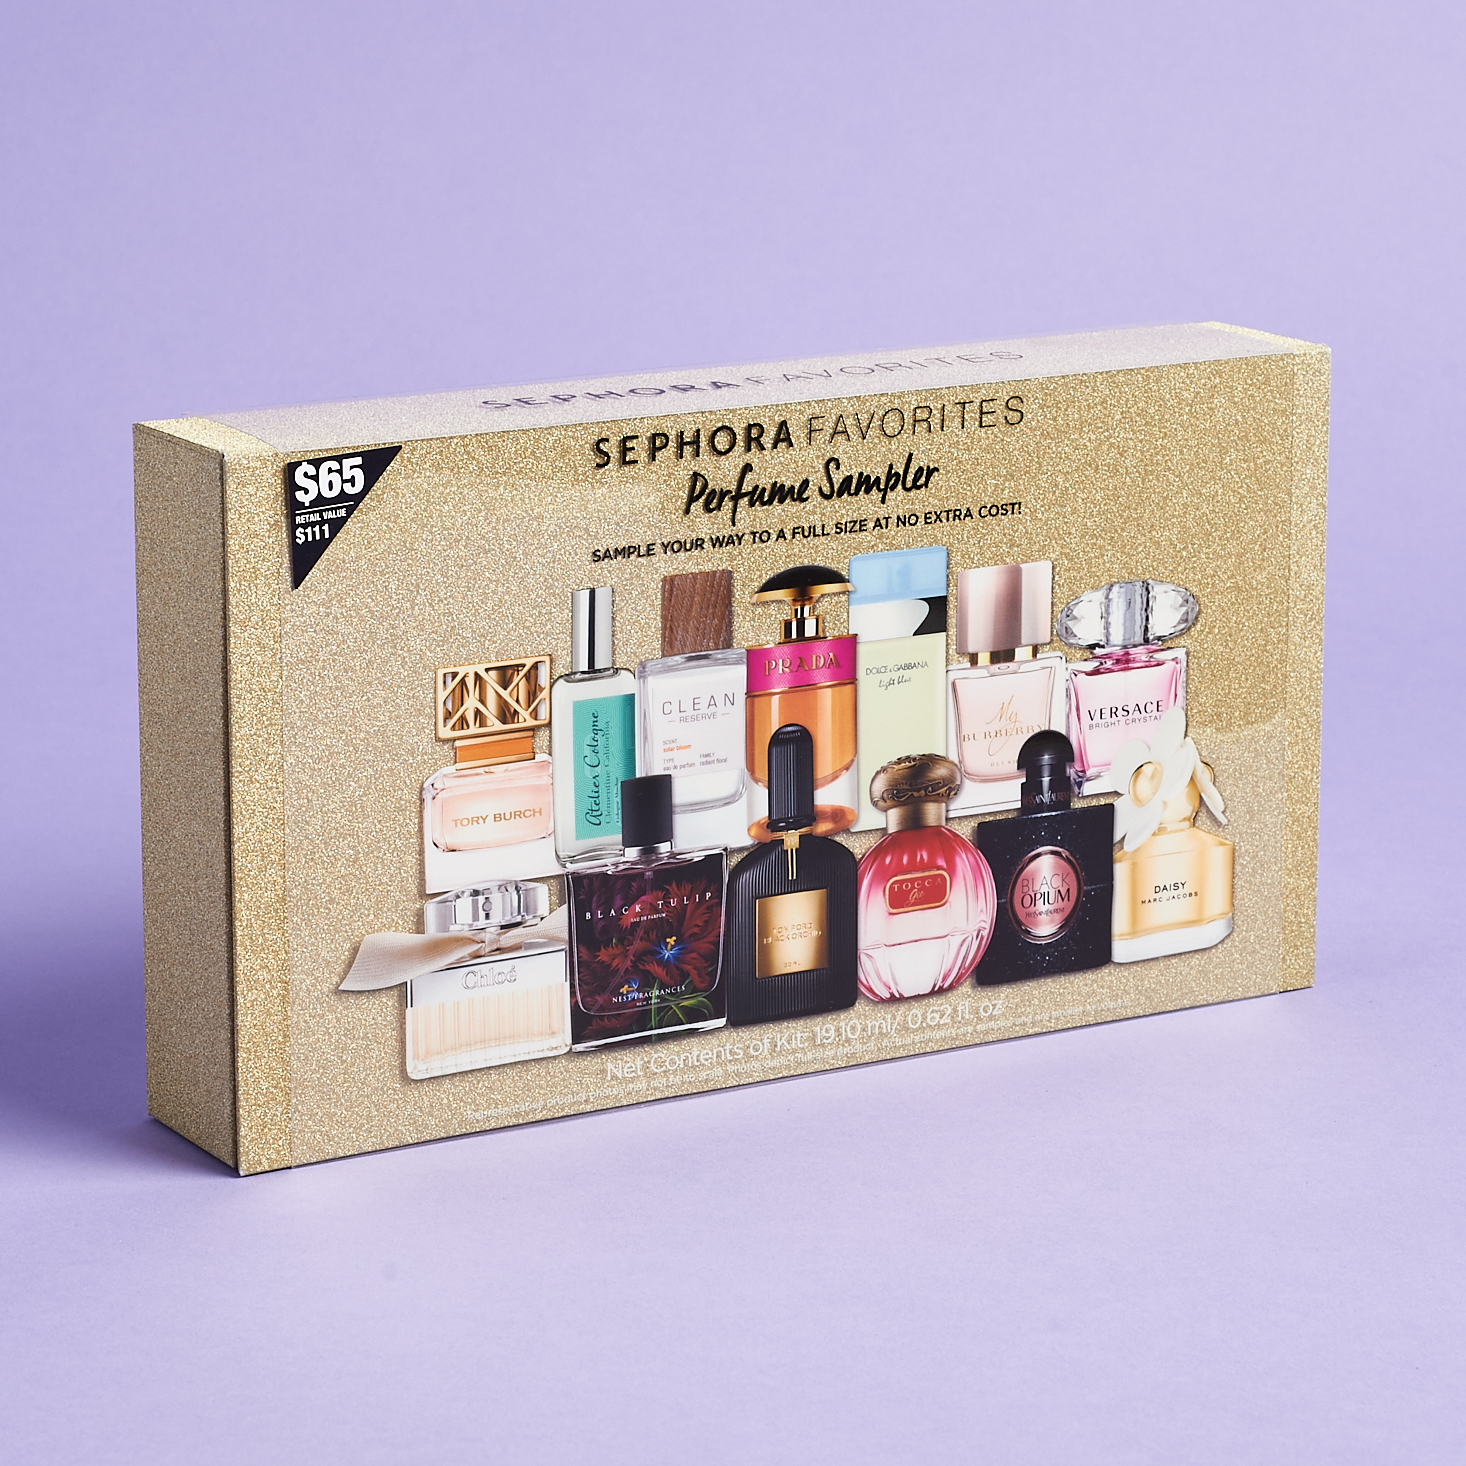 Sephora Favorites Perfume Review - February 2020 | MSA